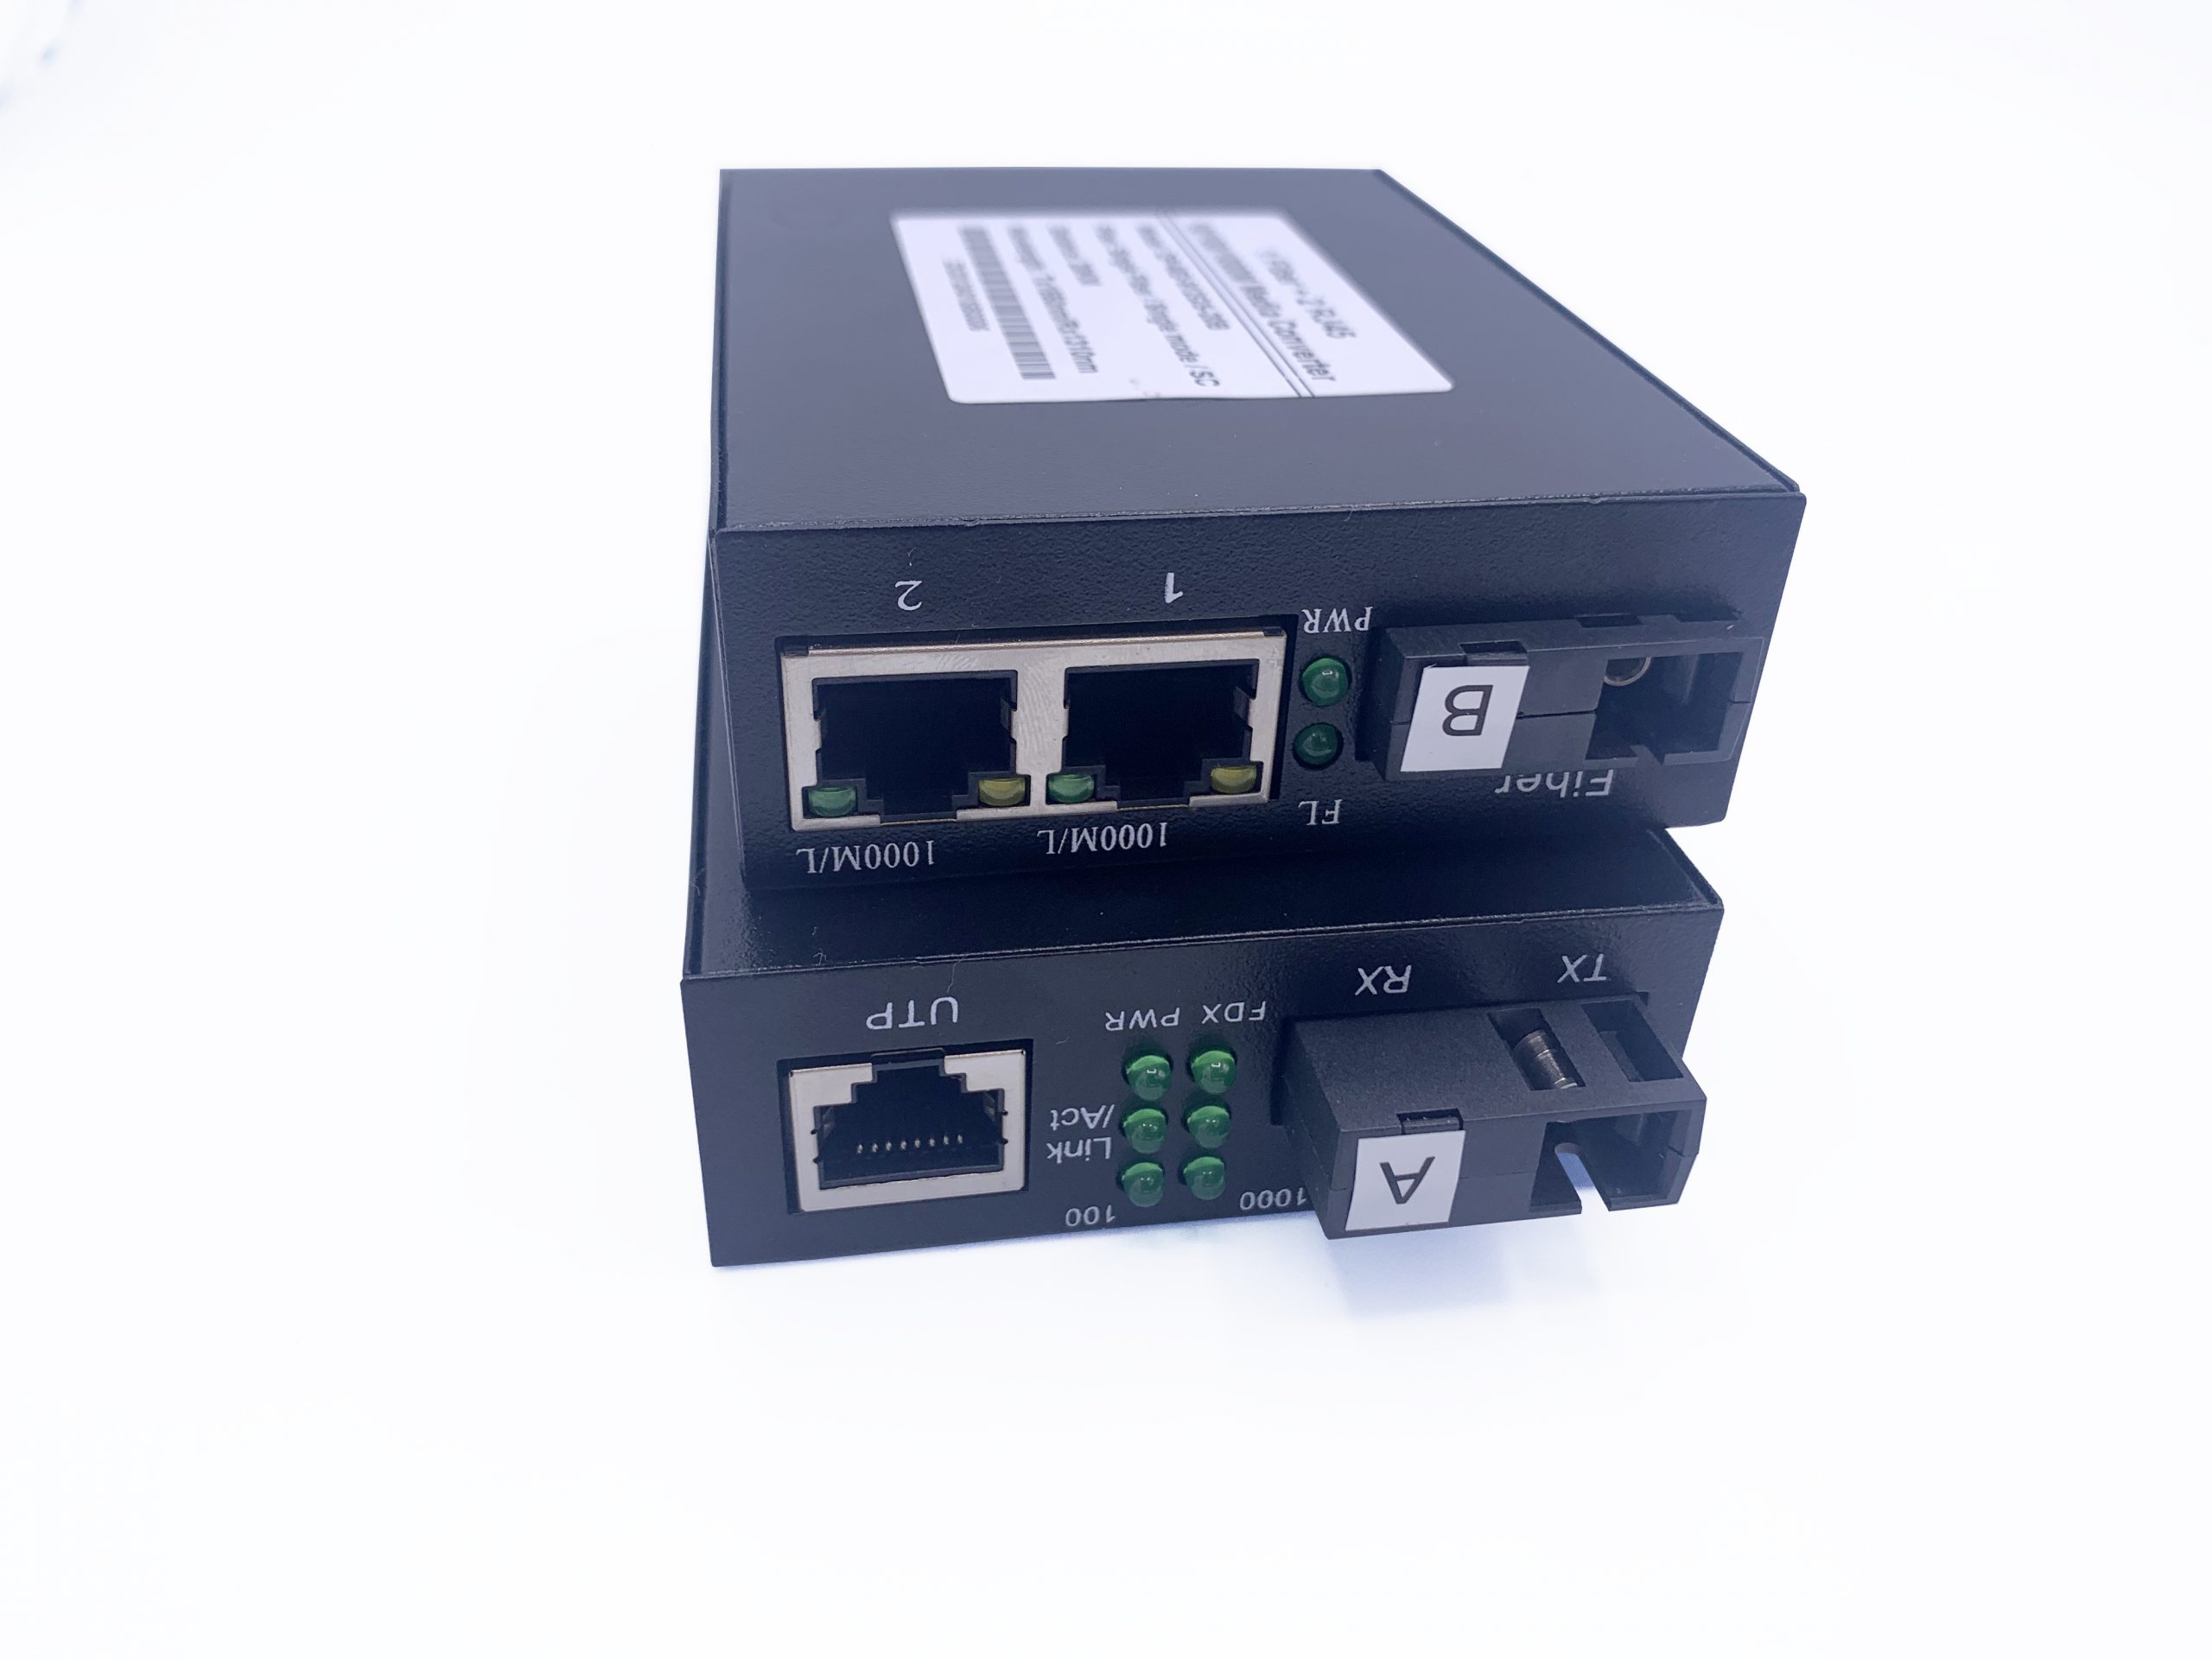 Convertisseur Fibre Ethernet Port1-Port4 (Lot 2) (Ref:2181) – Elfcam -  Fiber Solution Specialist